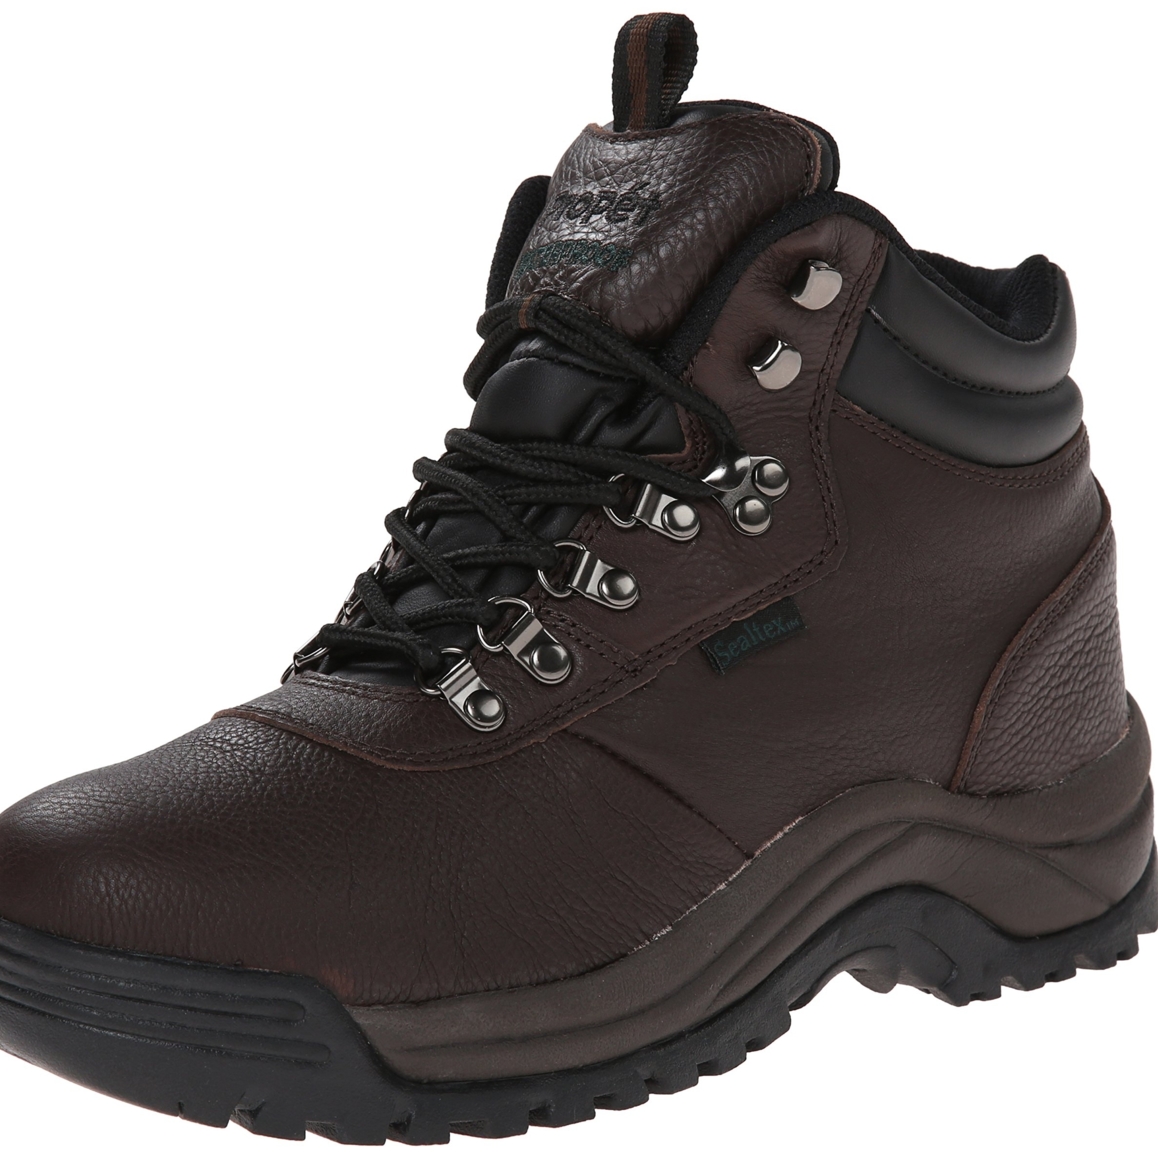 Propet Men's Cliff Walker Hiking Boot Bronco Brown - M3188BRO - BRONCO BROWN, 13-4E